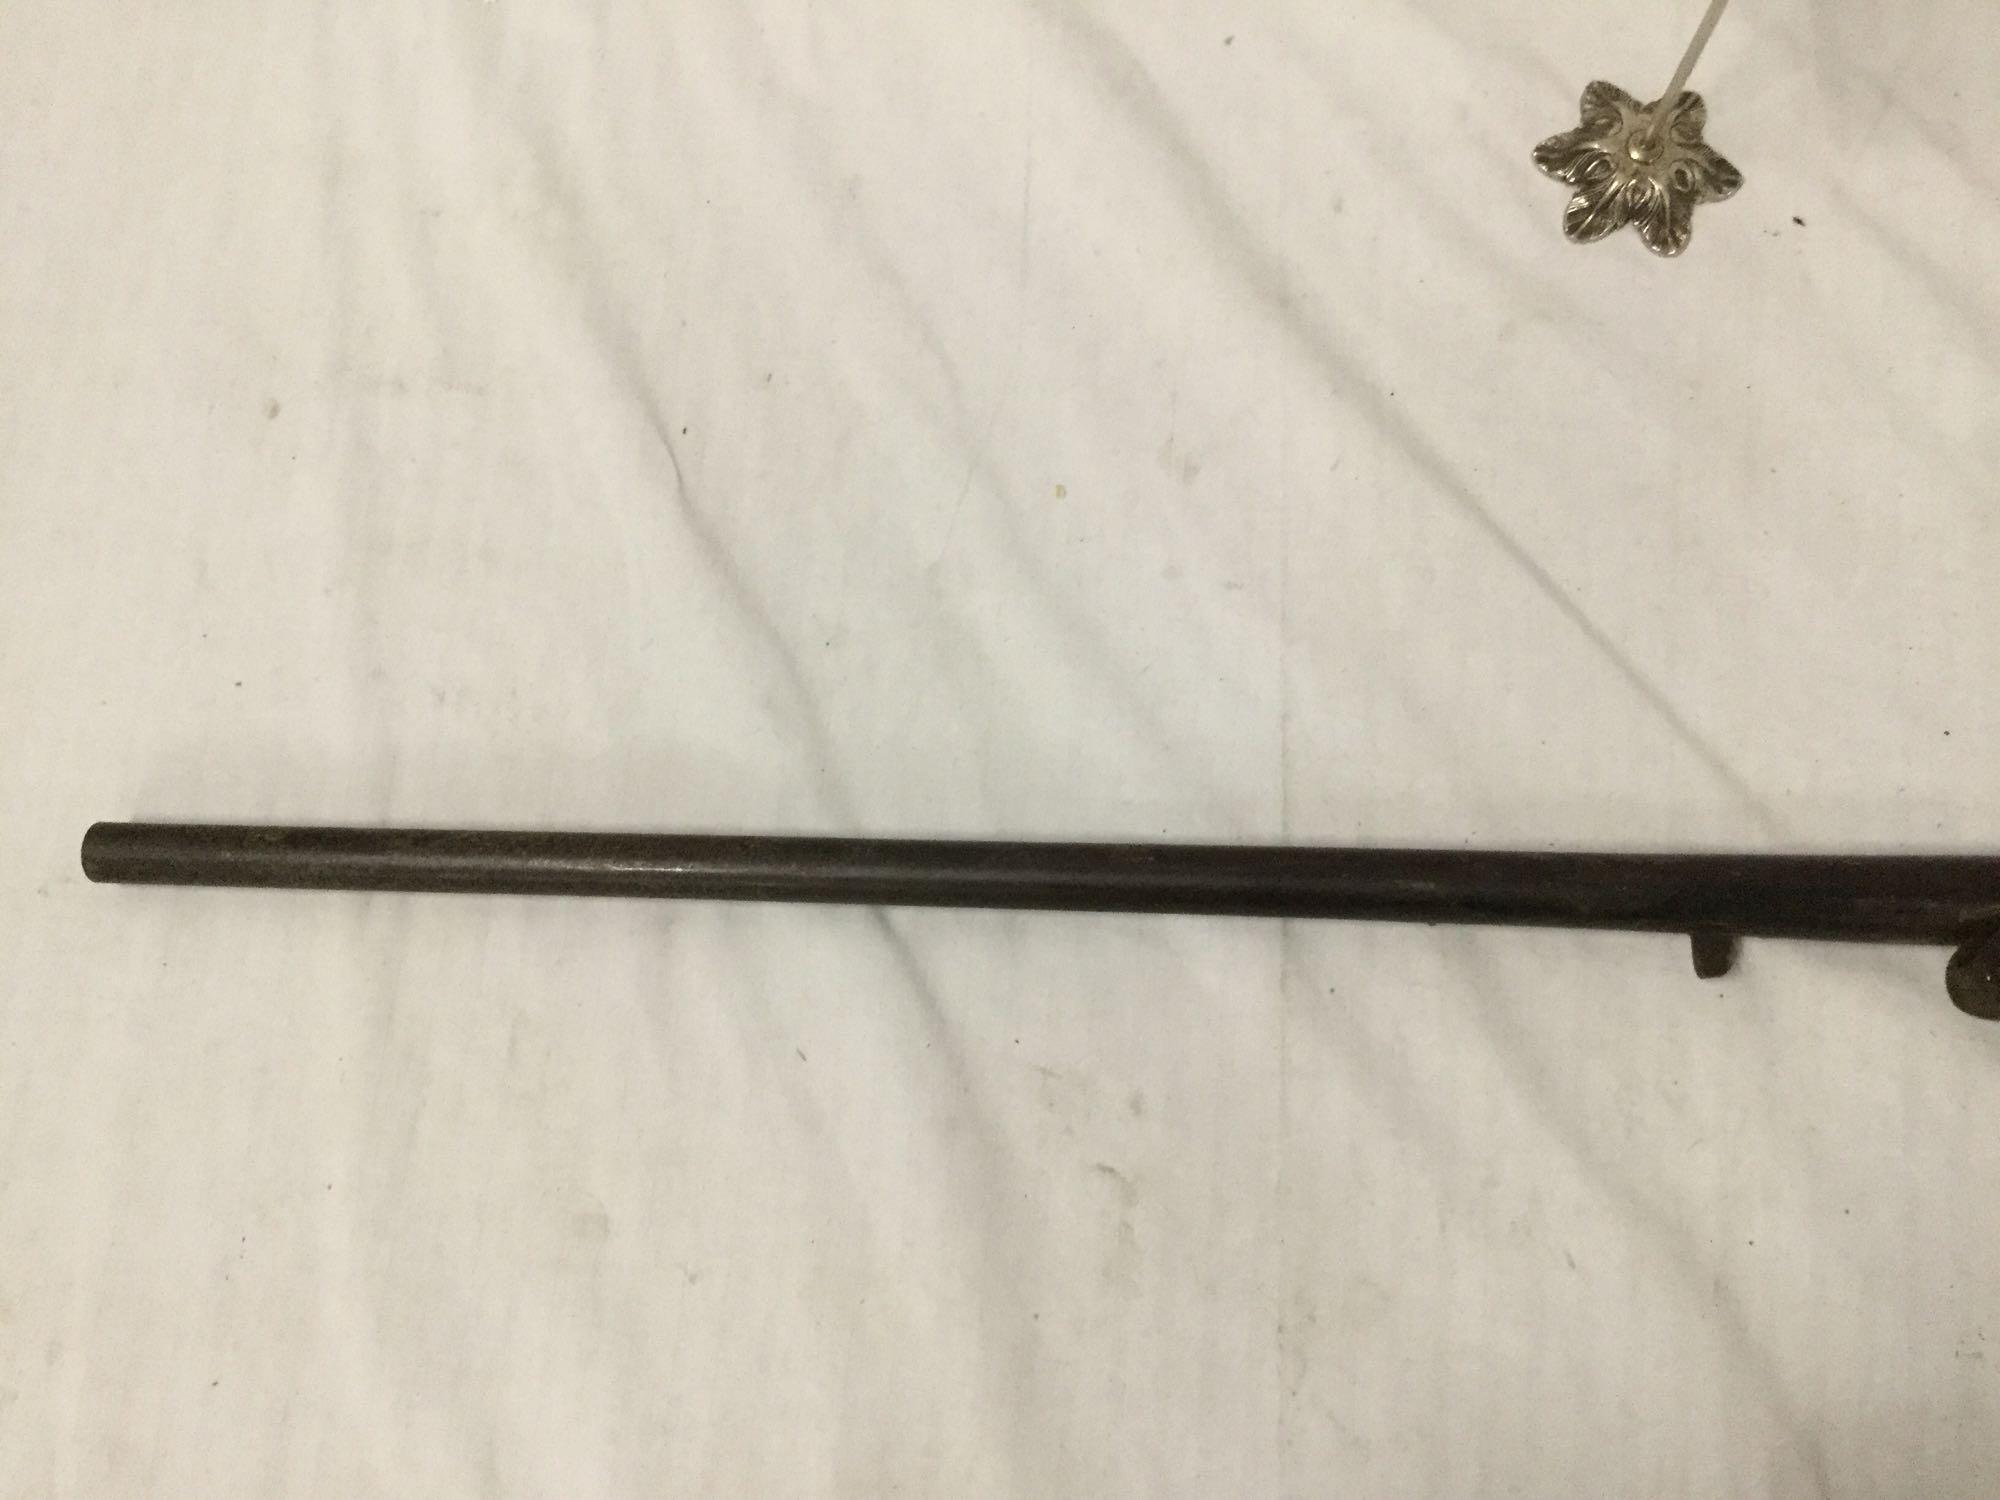 Antique Volunteer Arms Co Singe Barrel .20 gauge shotgun - unfiring wall hanger